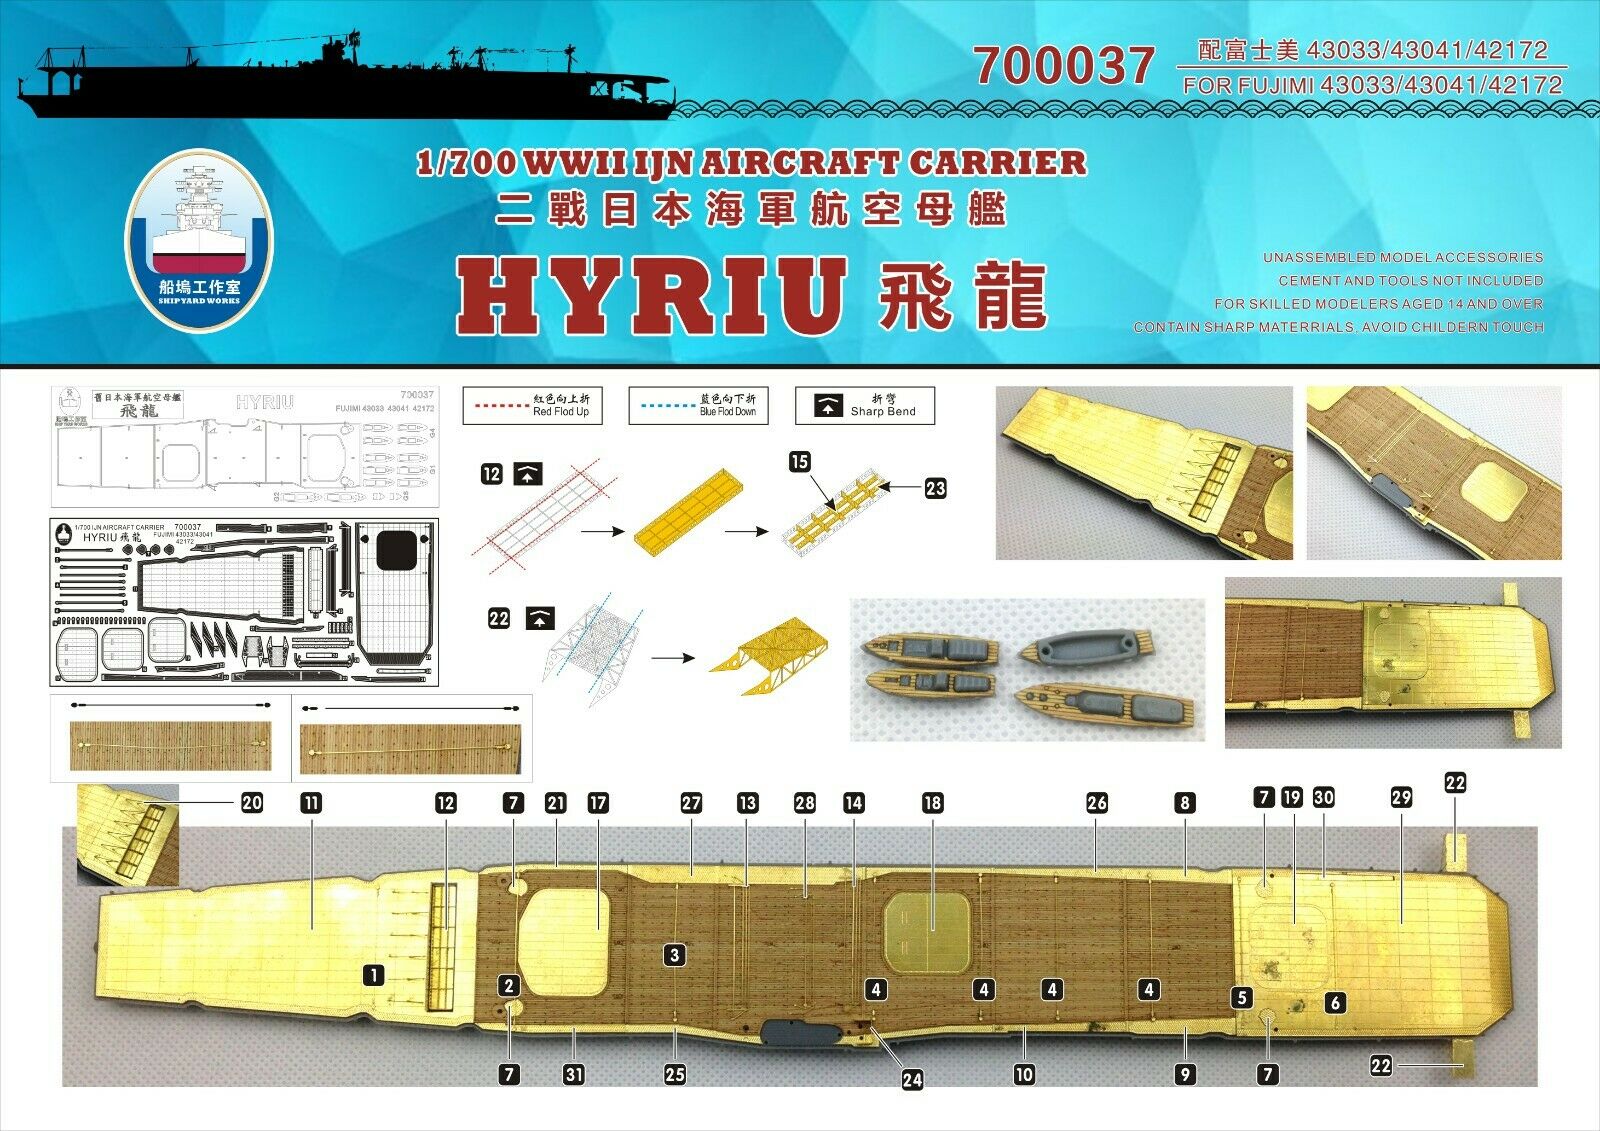 Shipyardworks 1/700 Wooden Deck Ijn Hyriu For Fujimi 43033 42172 43041 (700037)